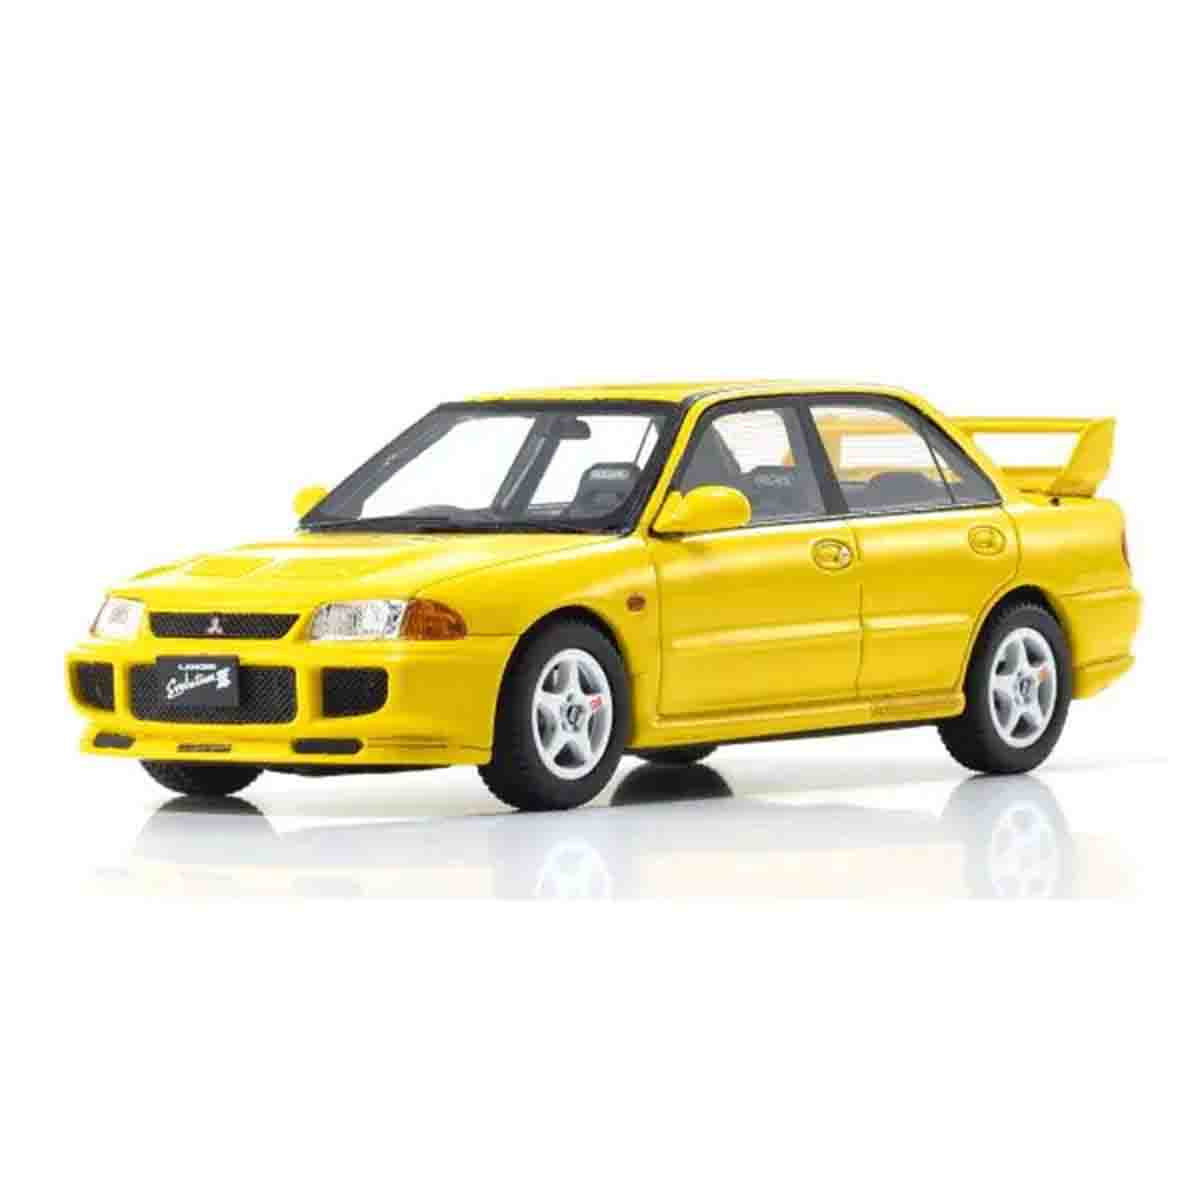 Mitsubishi Lancer Evolution III Yellow  - 1:43 Scale Resin Model Car